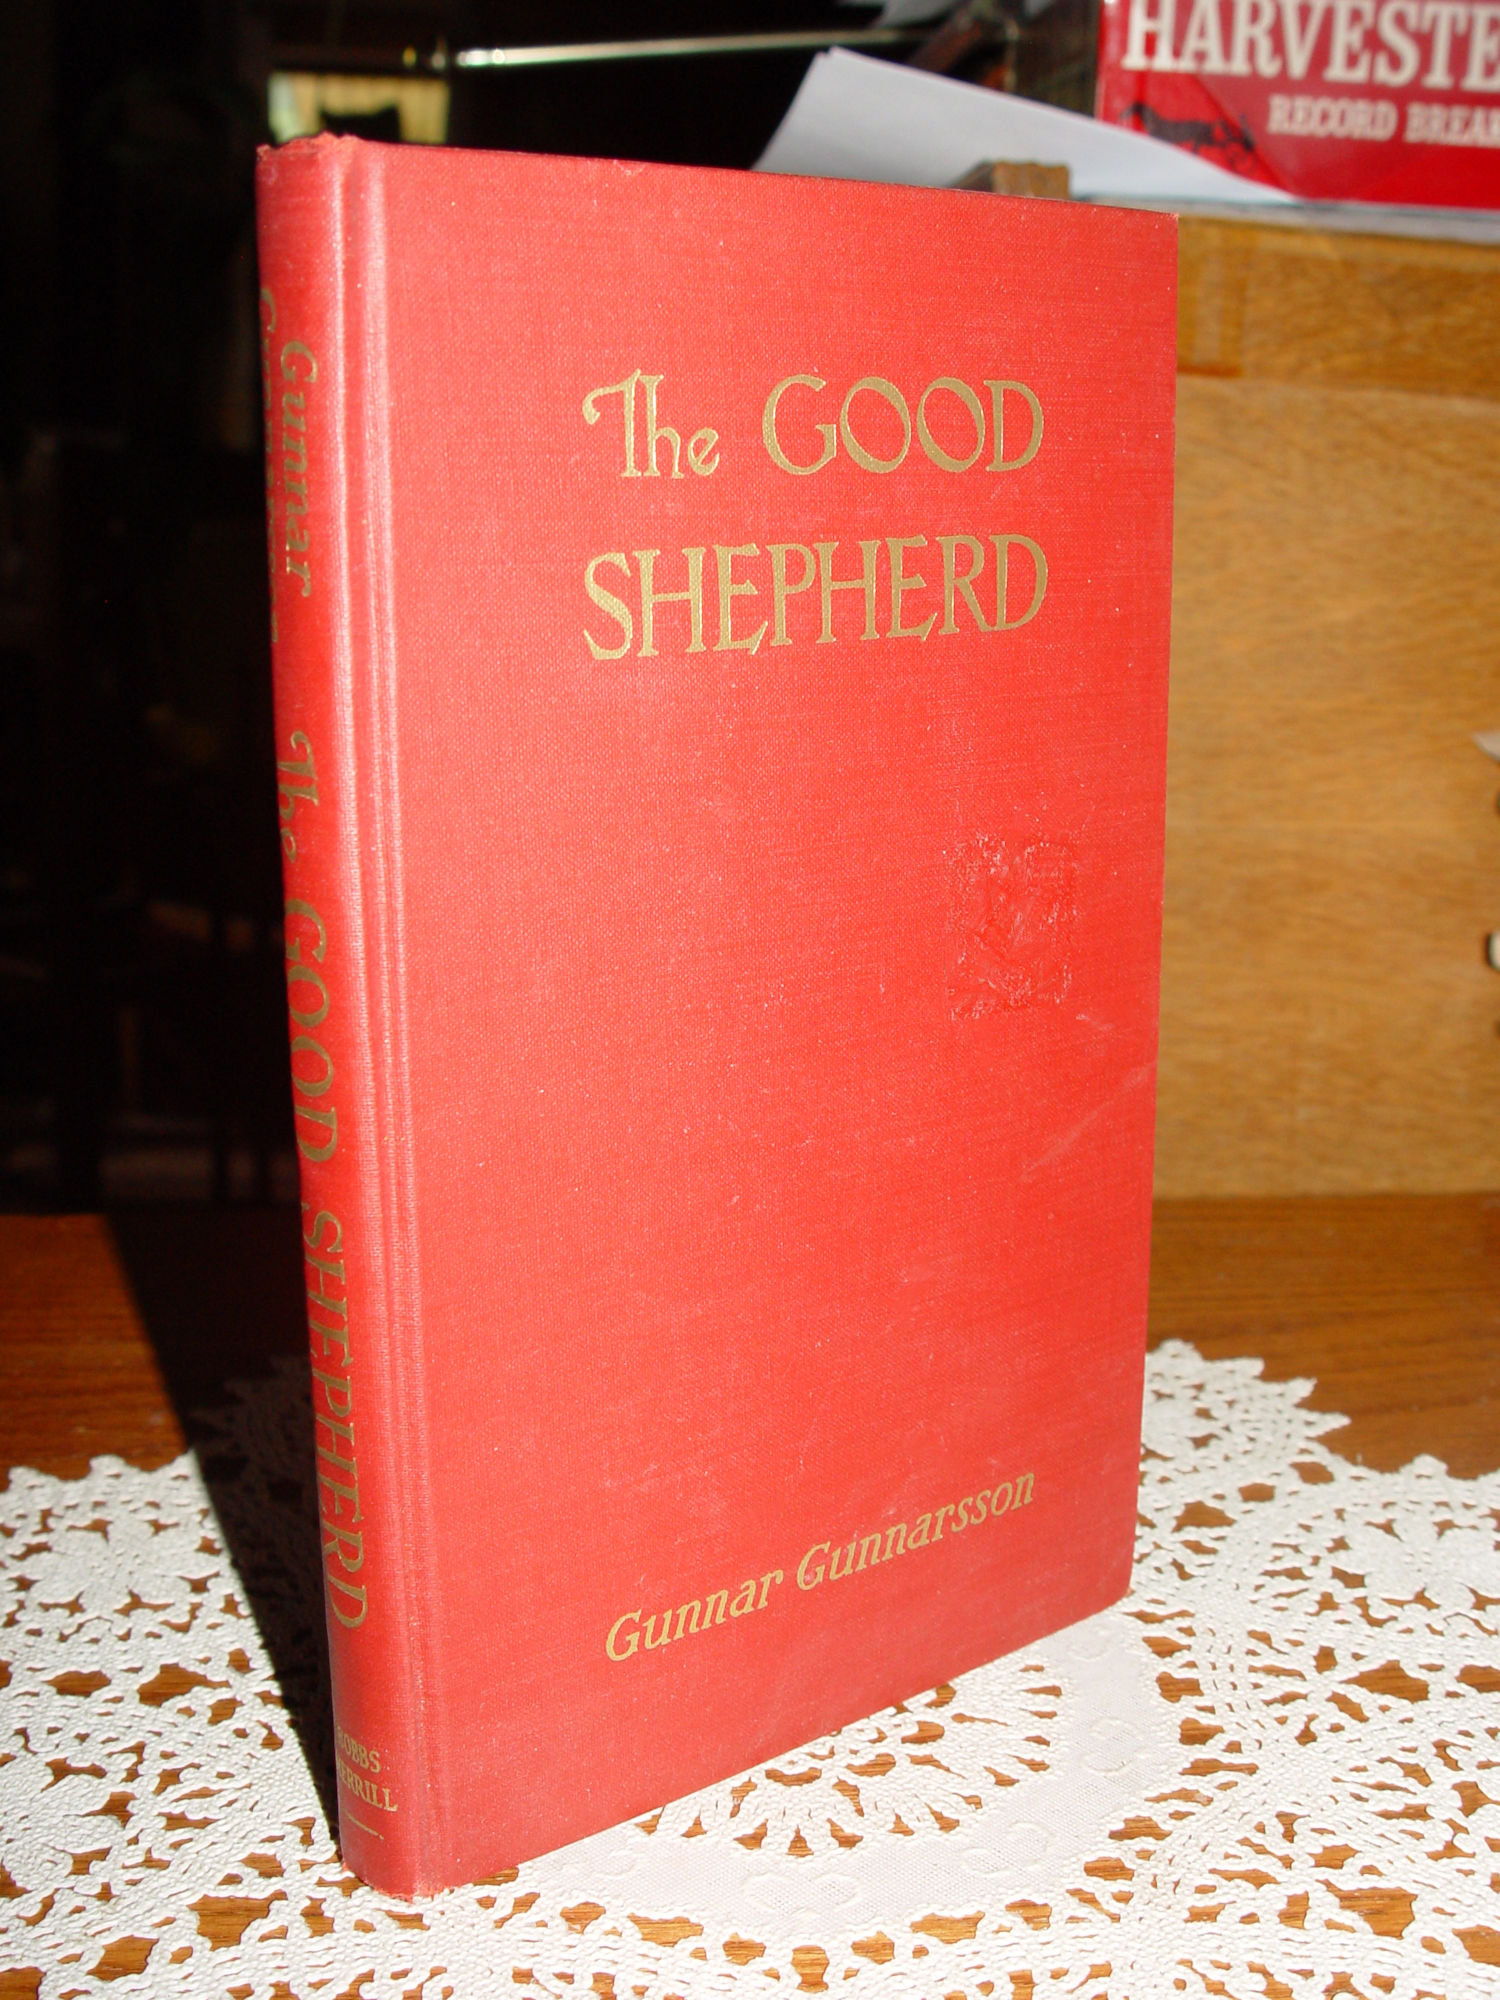 The Good Shepherd,1940 by Gunnar
                        Gunnarsson